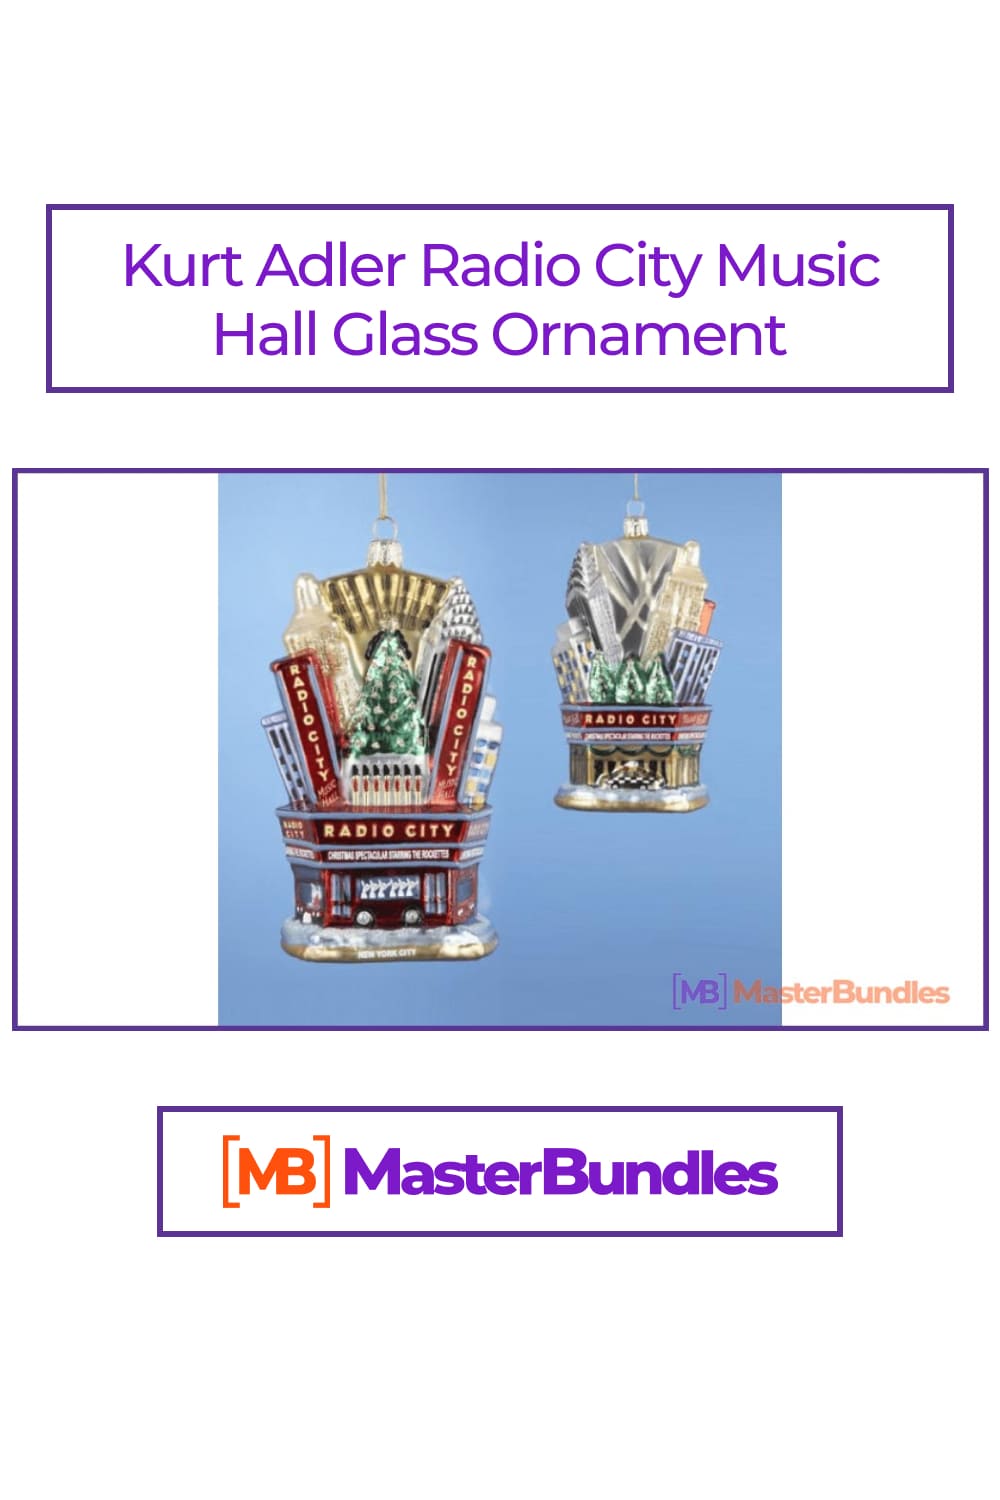 Kurt Adler Radio City Music Hall Glass Ornament.